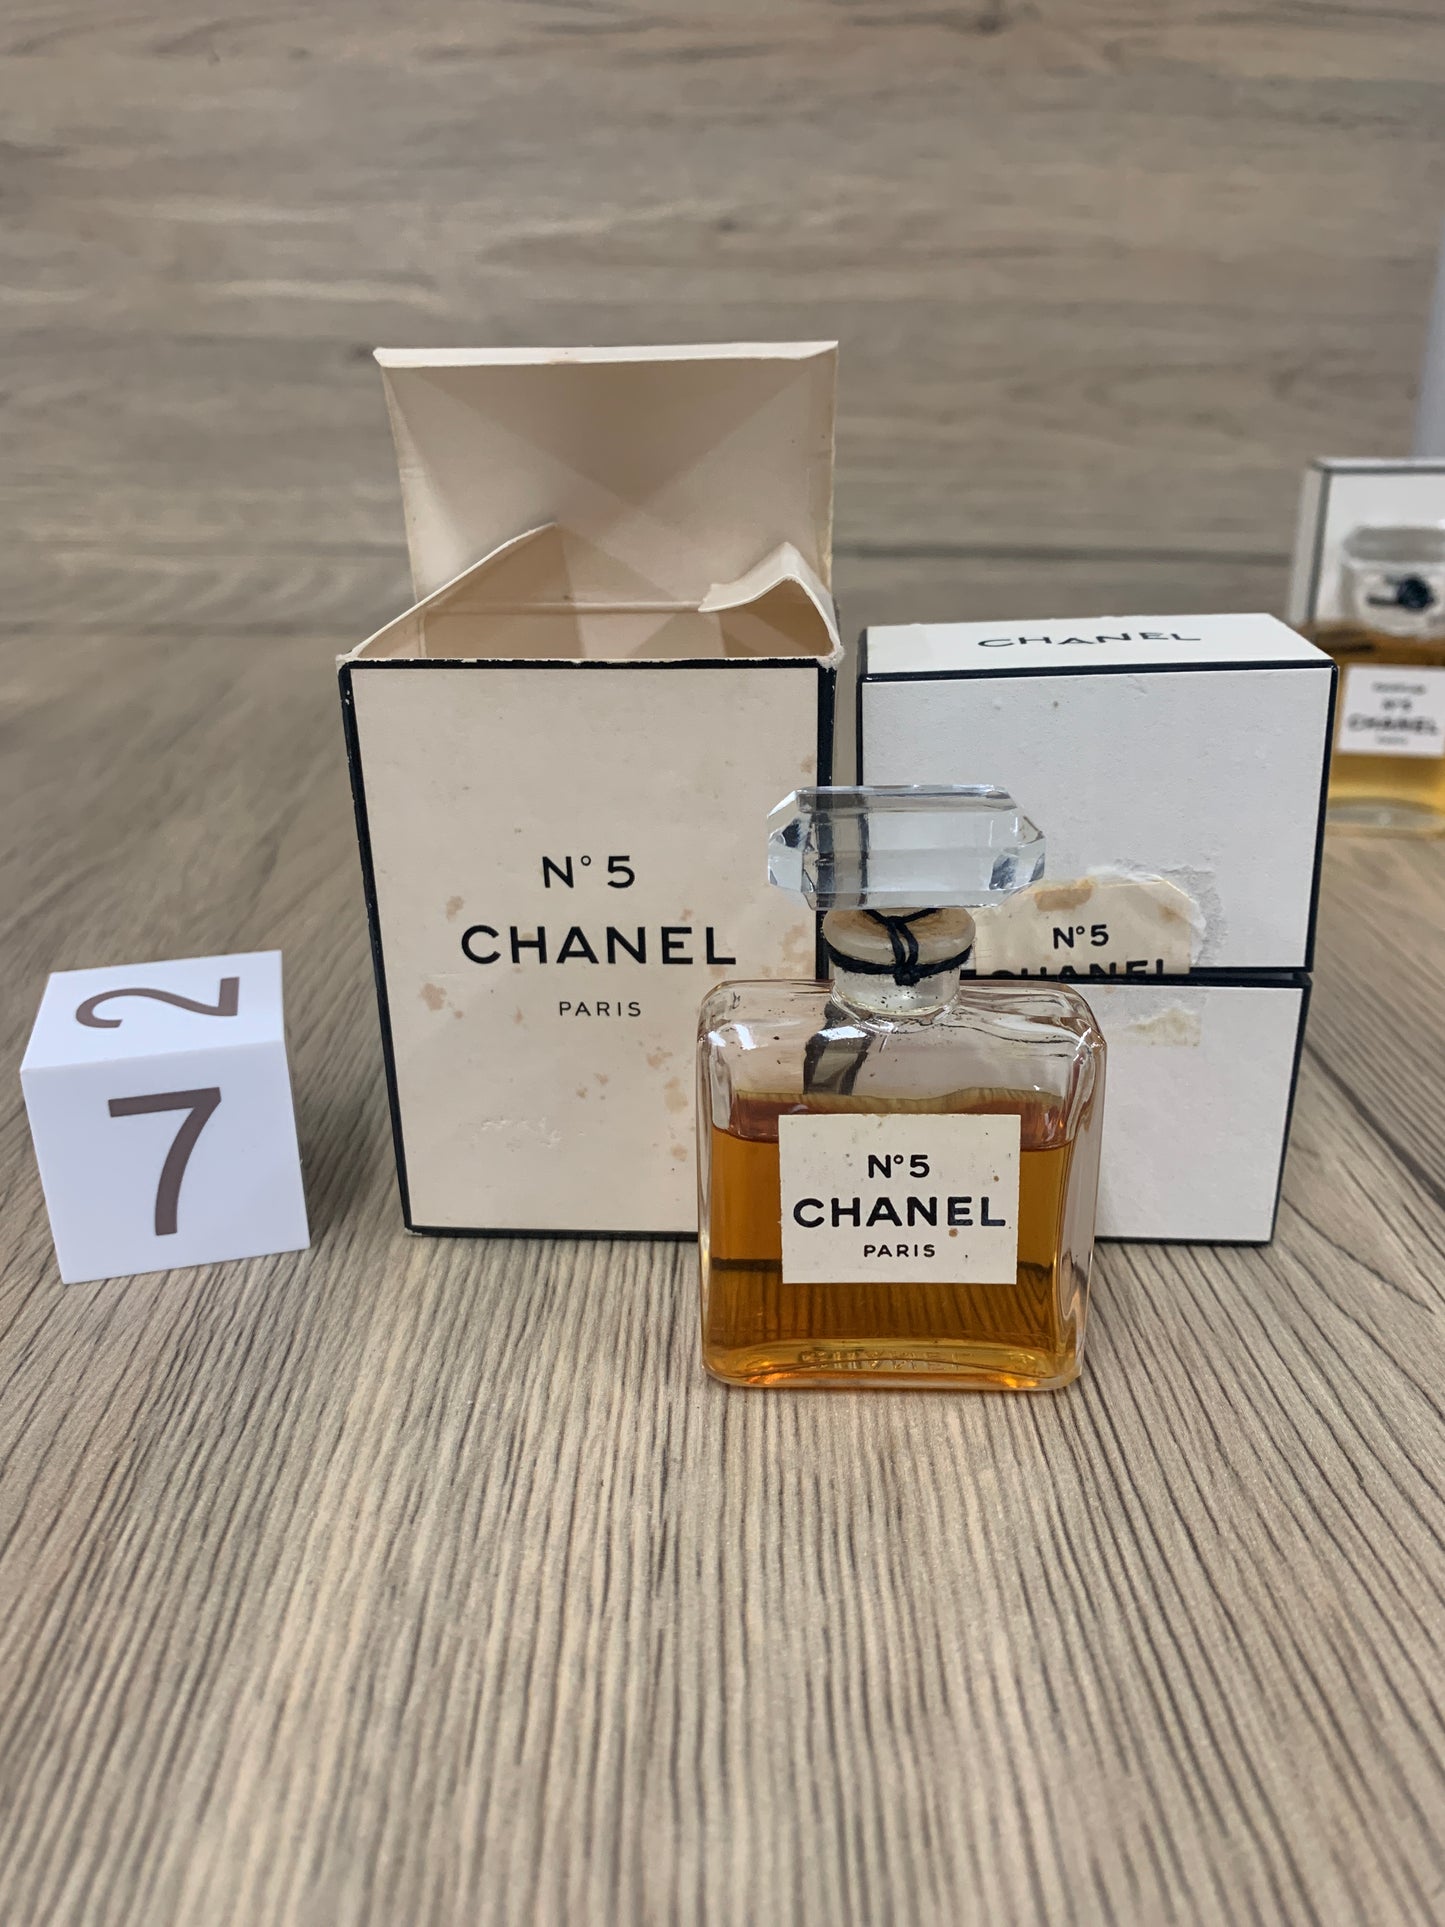 Authentic Chanel No. 5 Parfum Perfume 7ml 14ml 80's 90's - Mar25